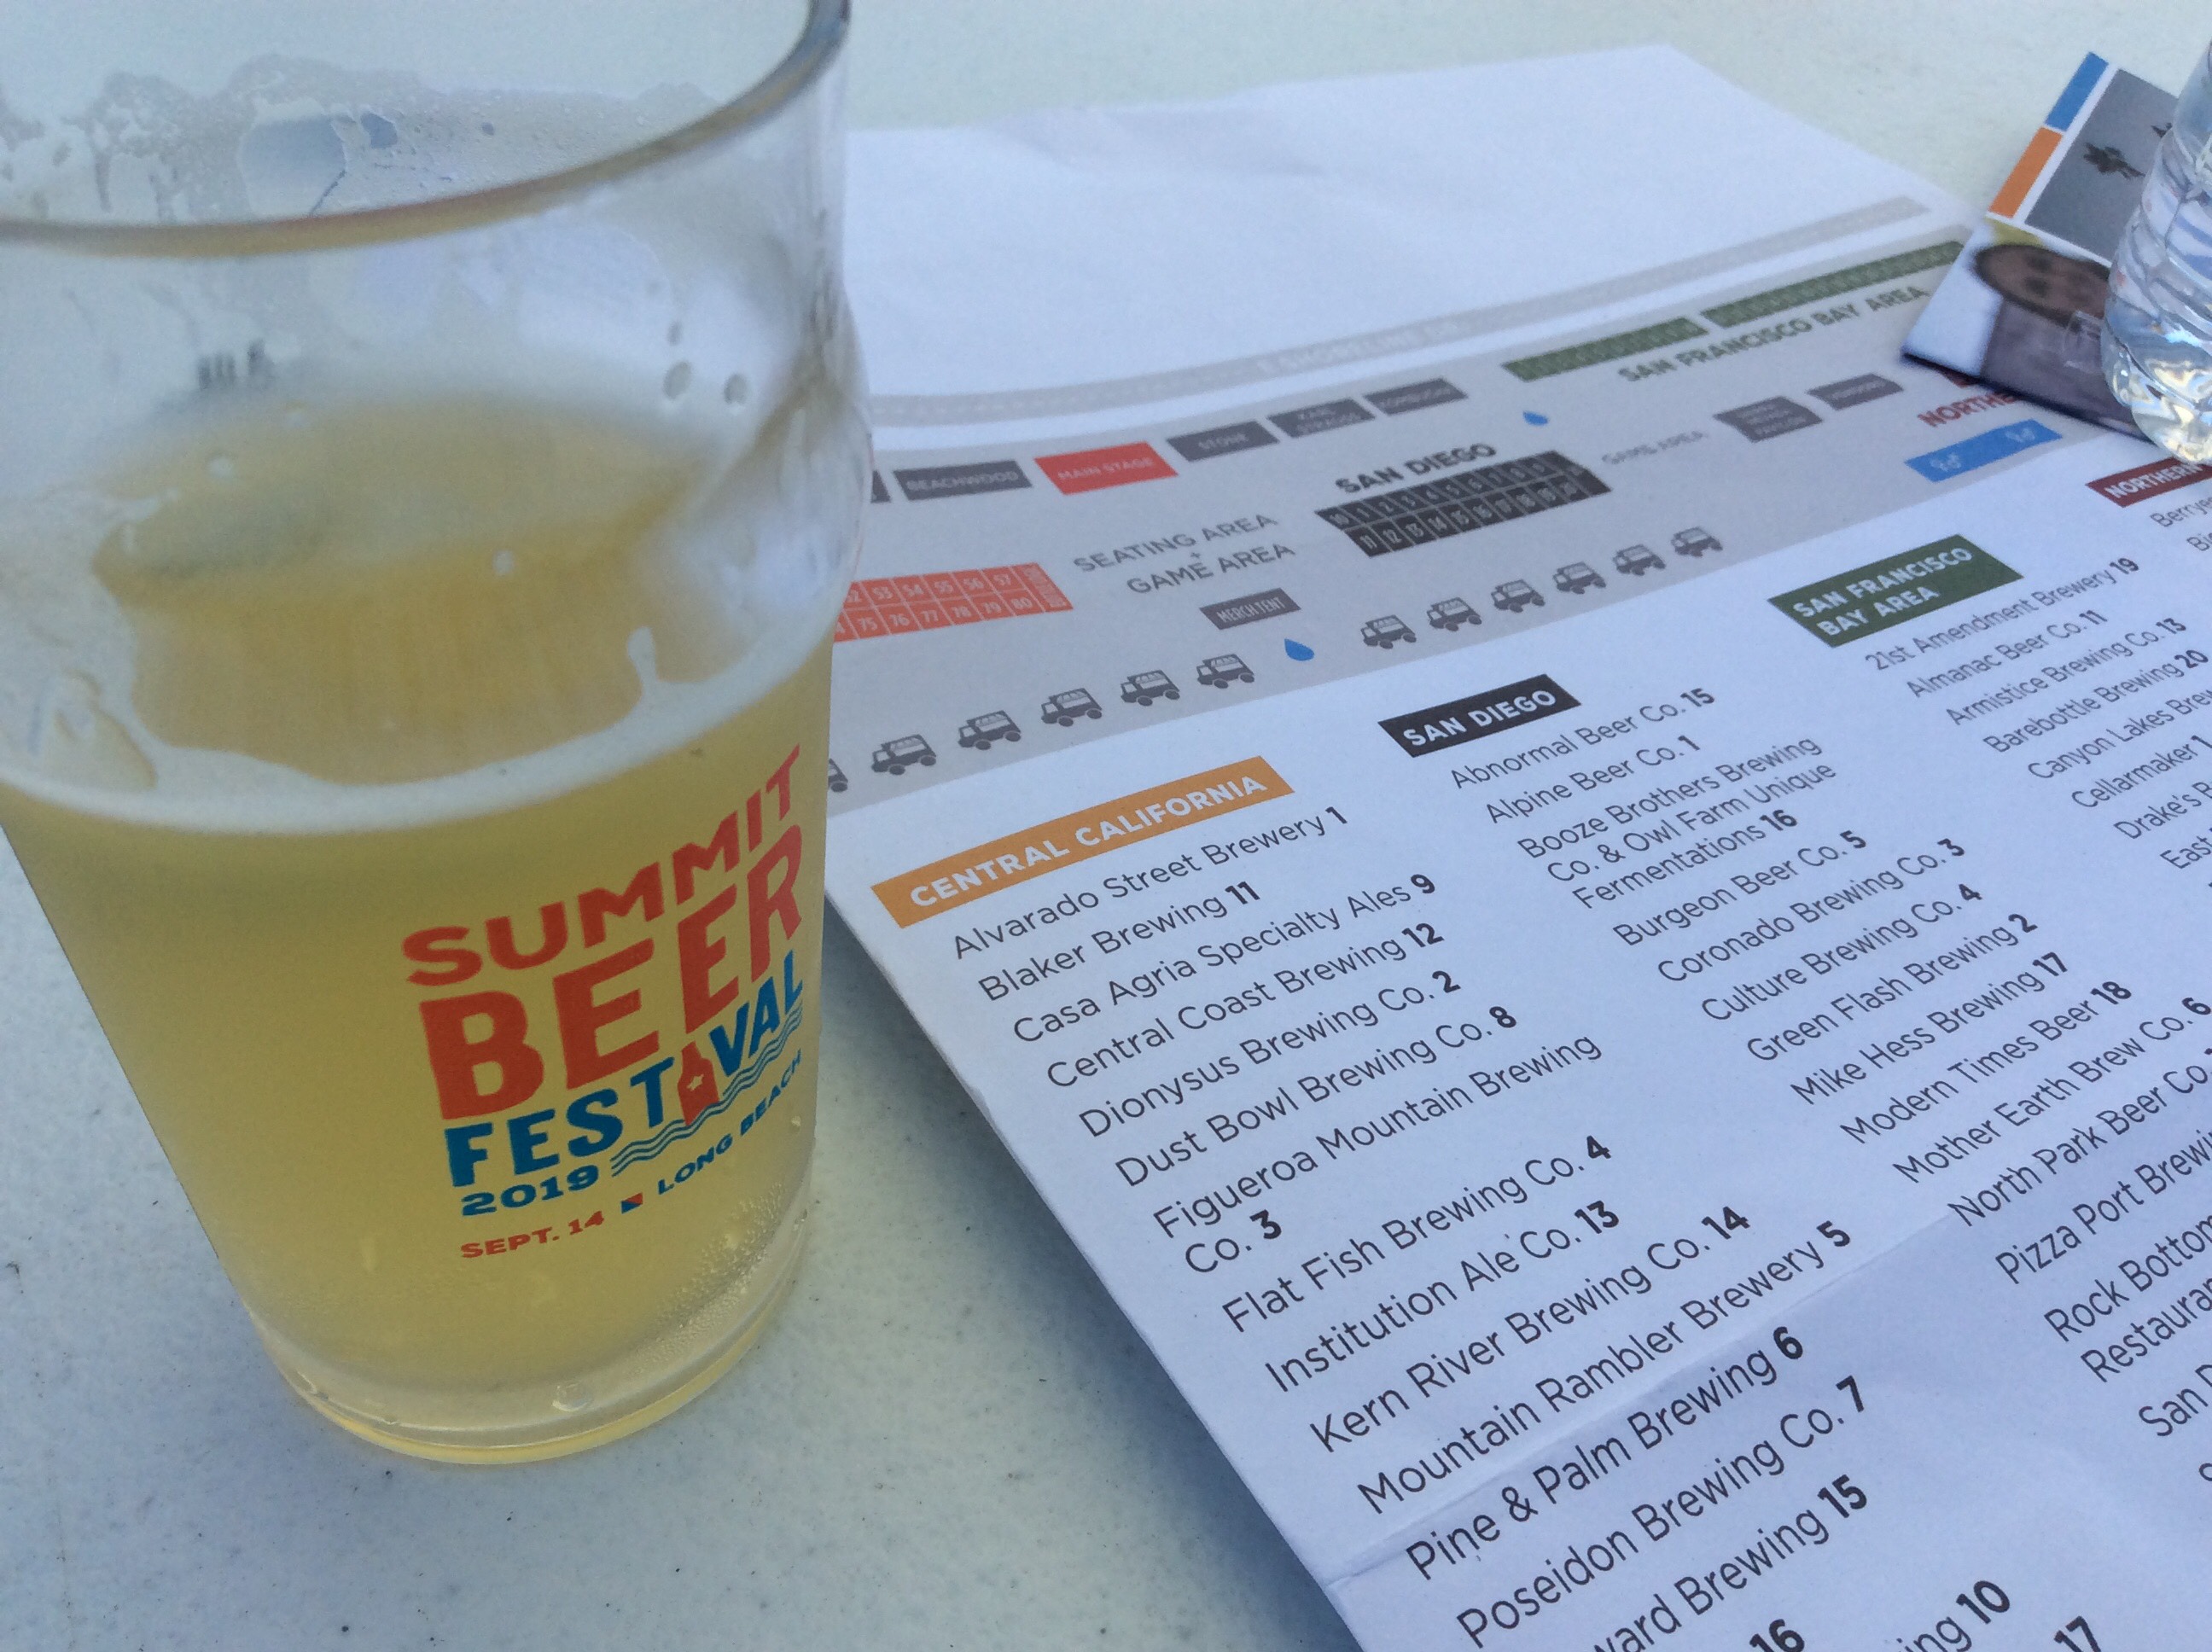 Beer Festival Long Beach